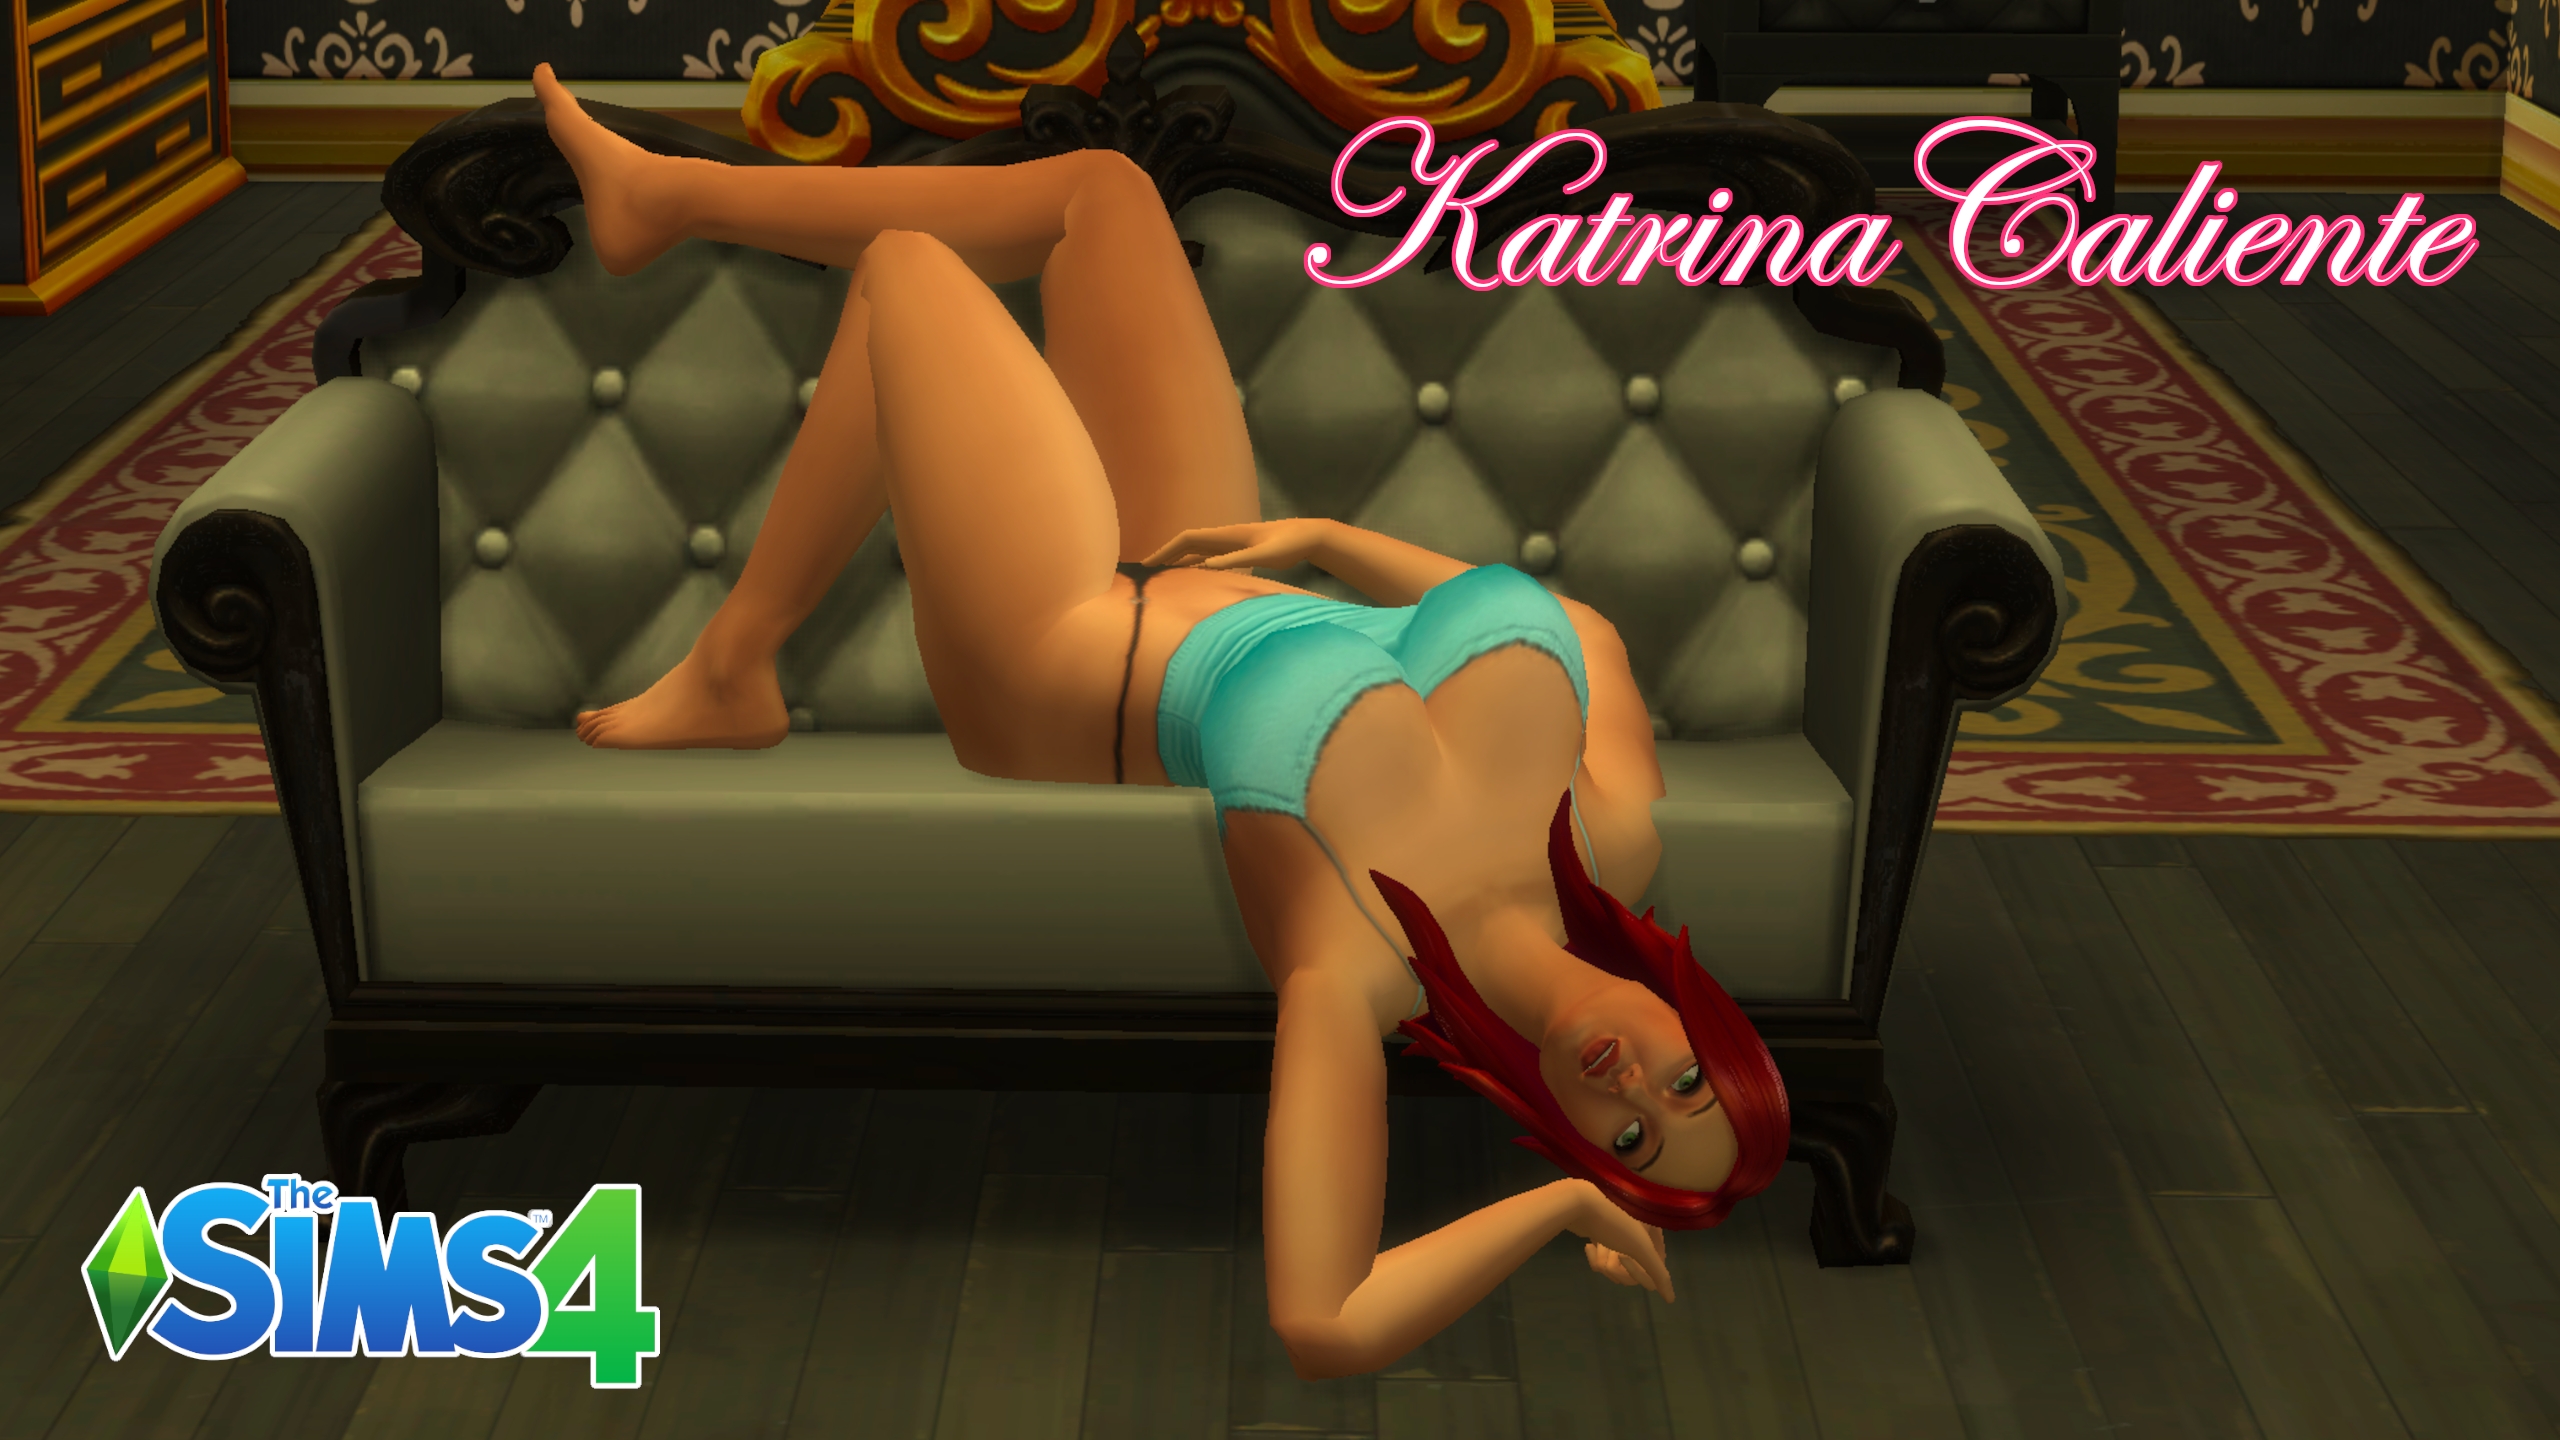 Katrina Caliente Desktop Wallpapers The Sims 4 Katrina Caliente Large Breasts Big Ass Thong Panties Red Hair Green Eyes Topless 2